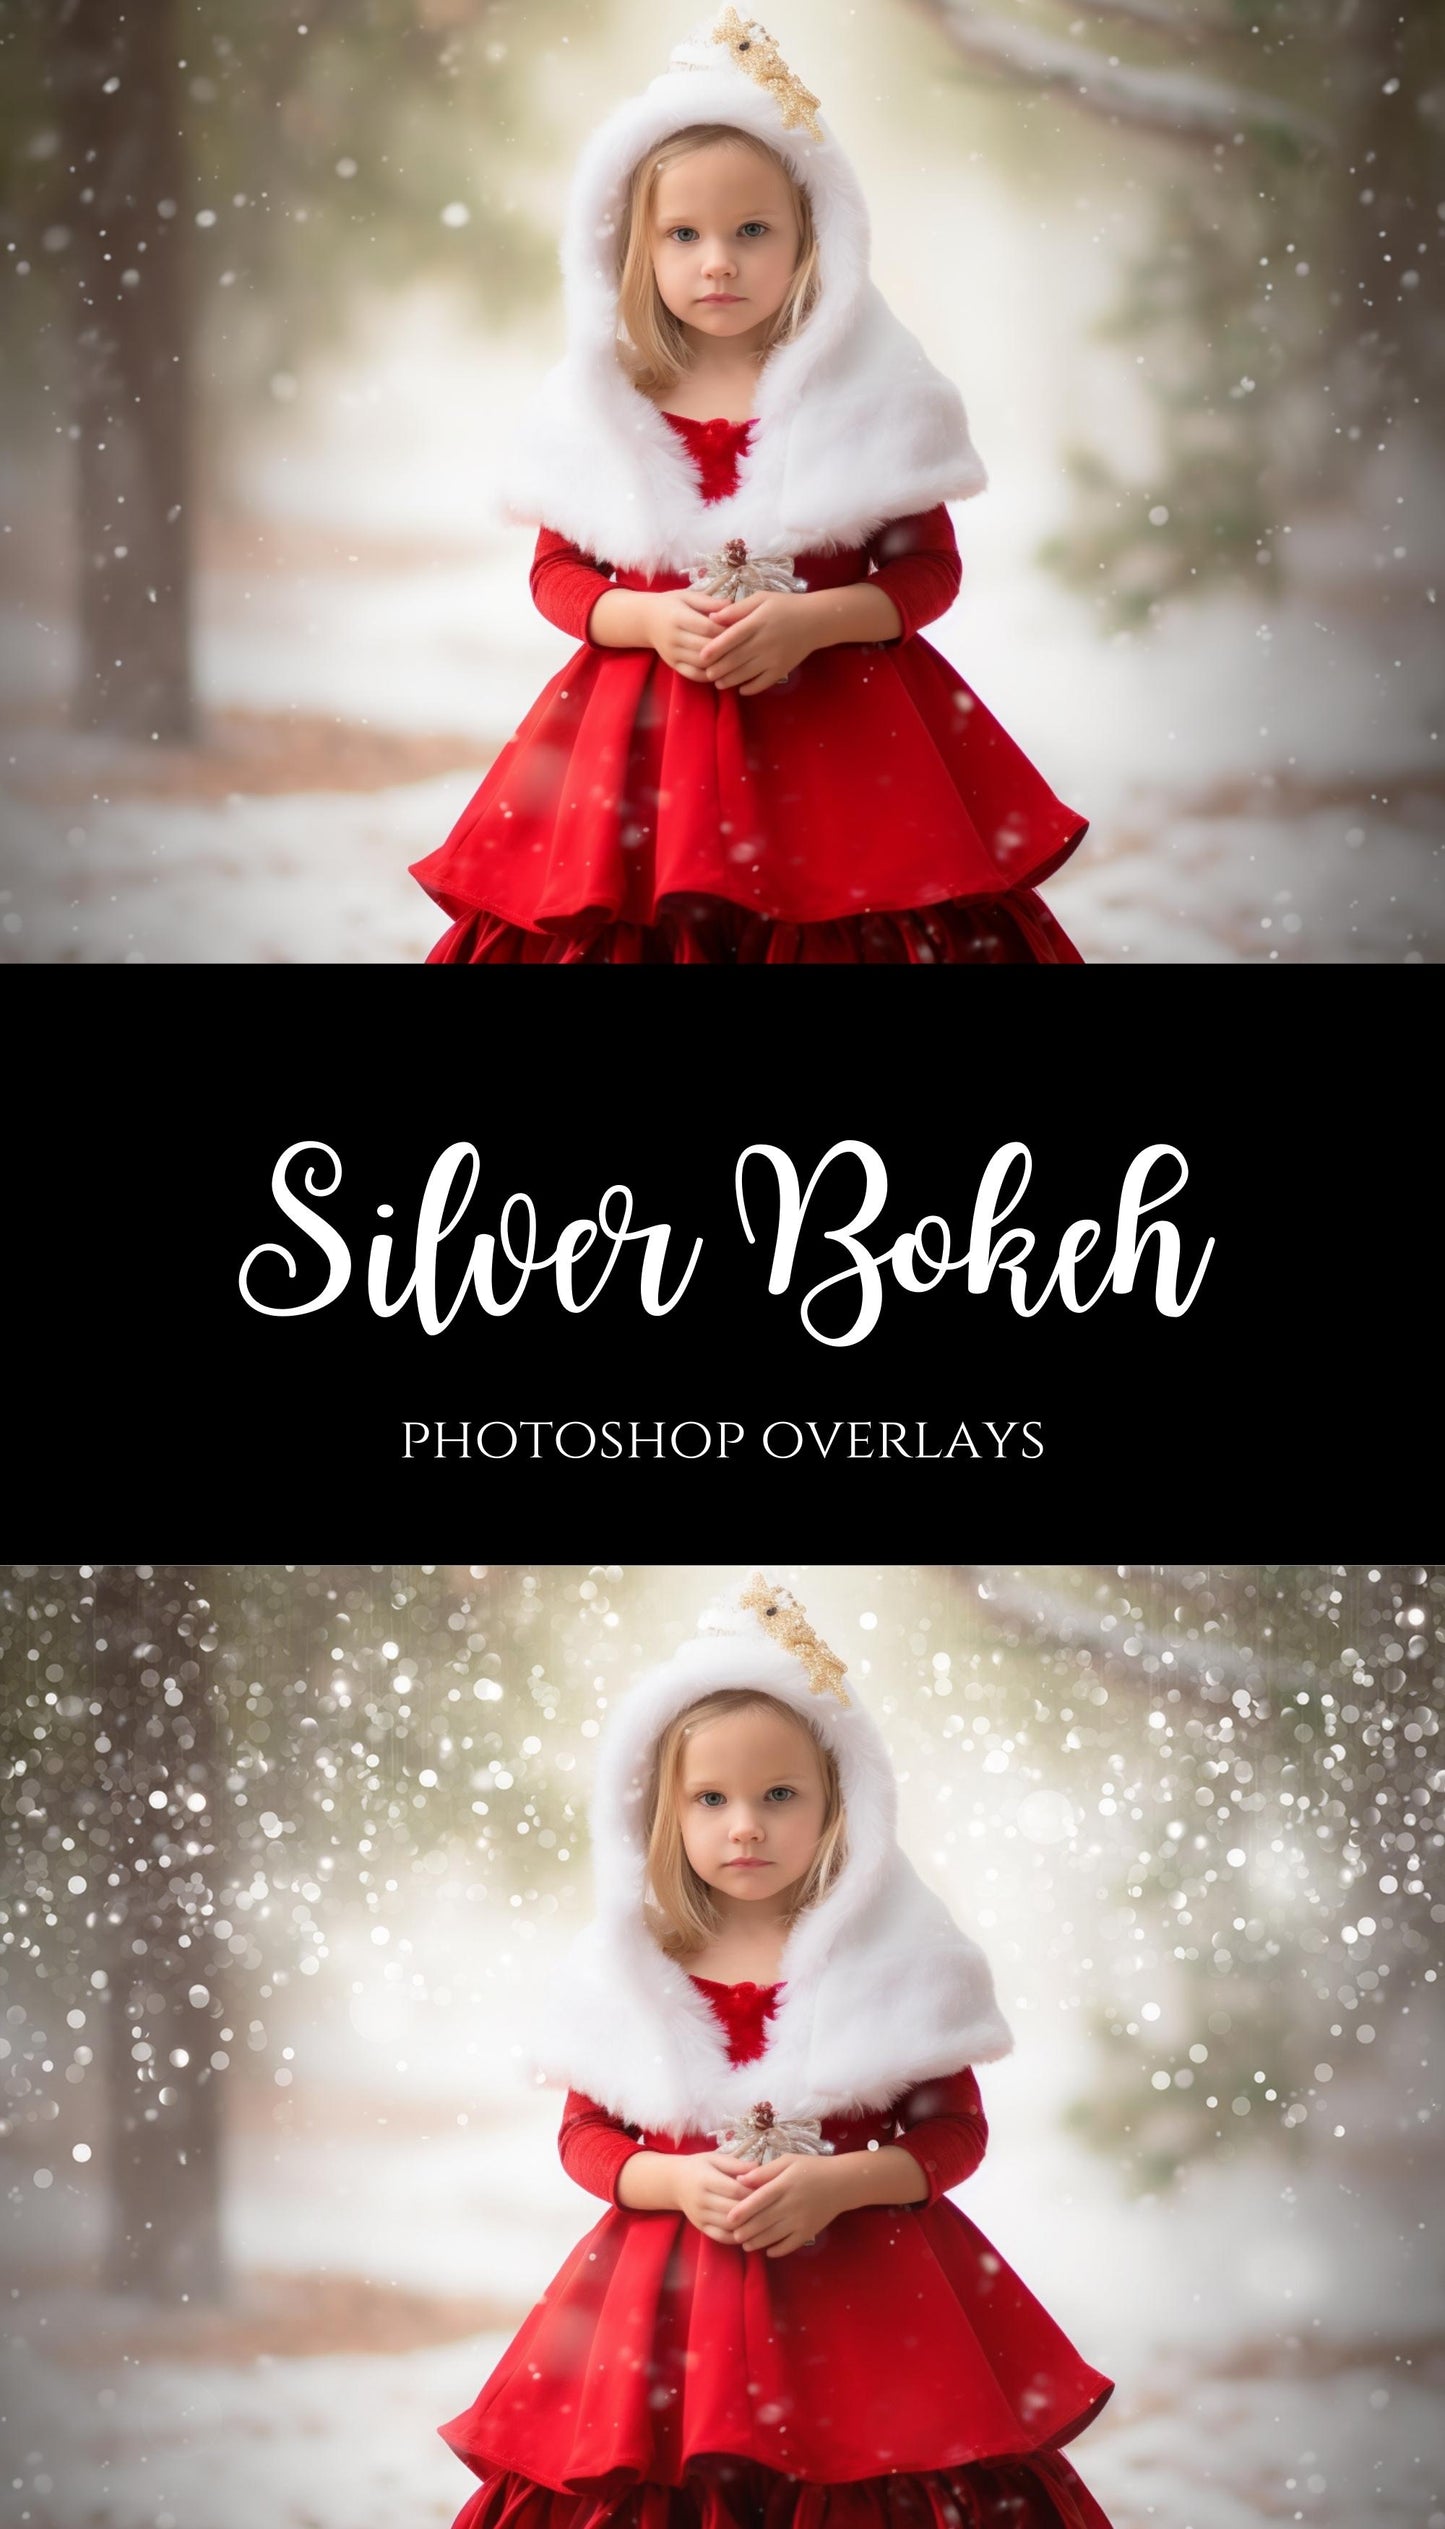 Silver Bokeh Light Christmas Overlays